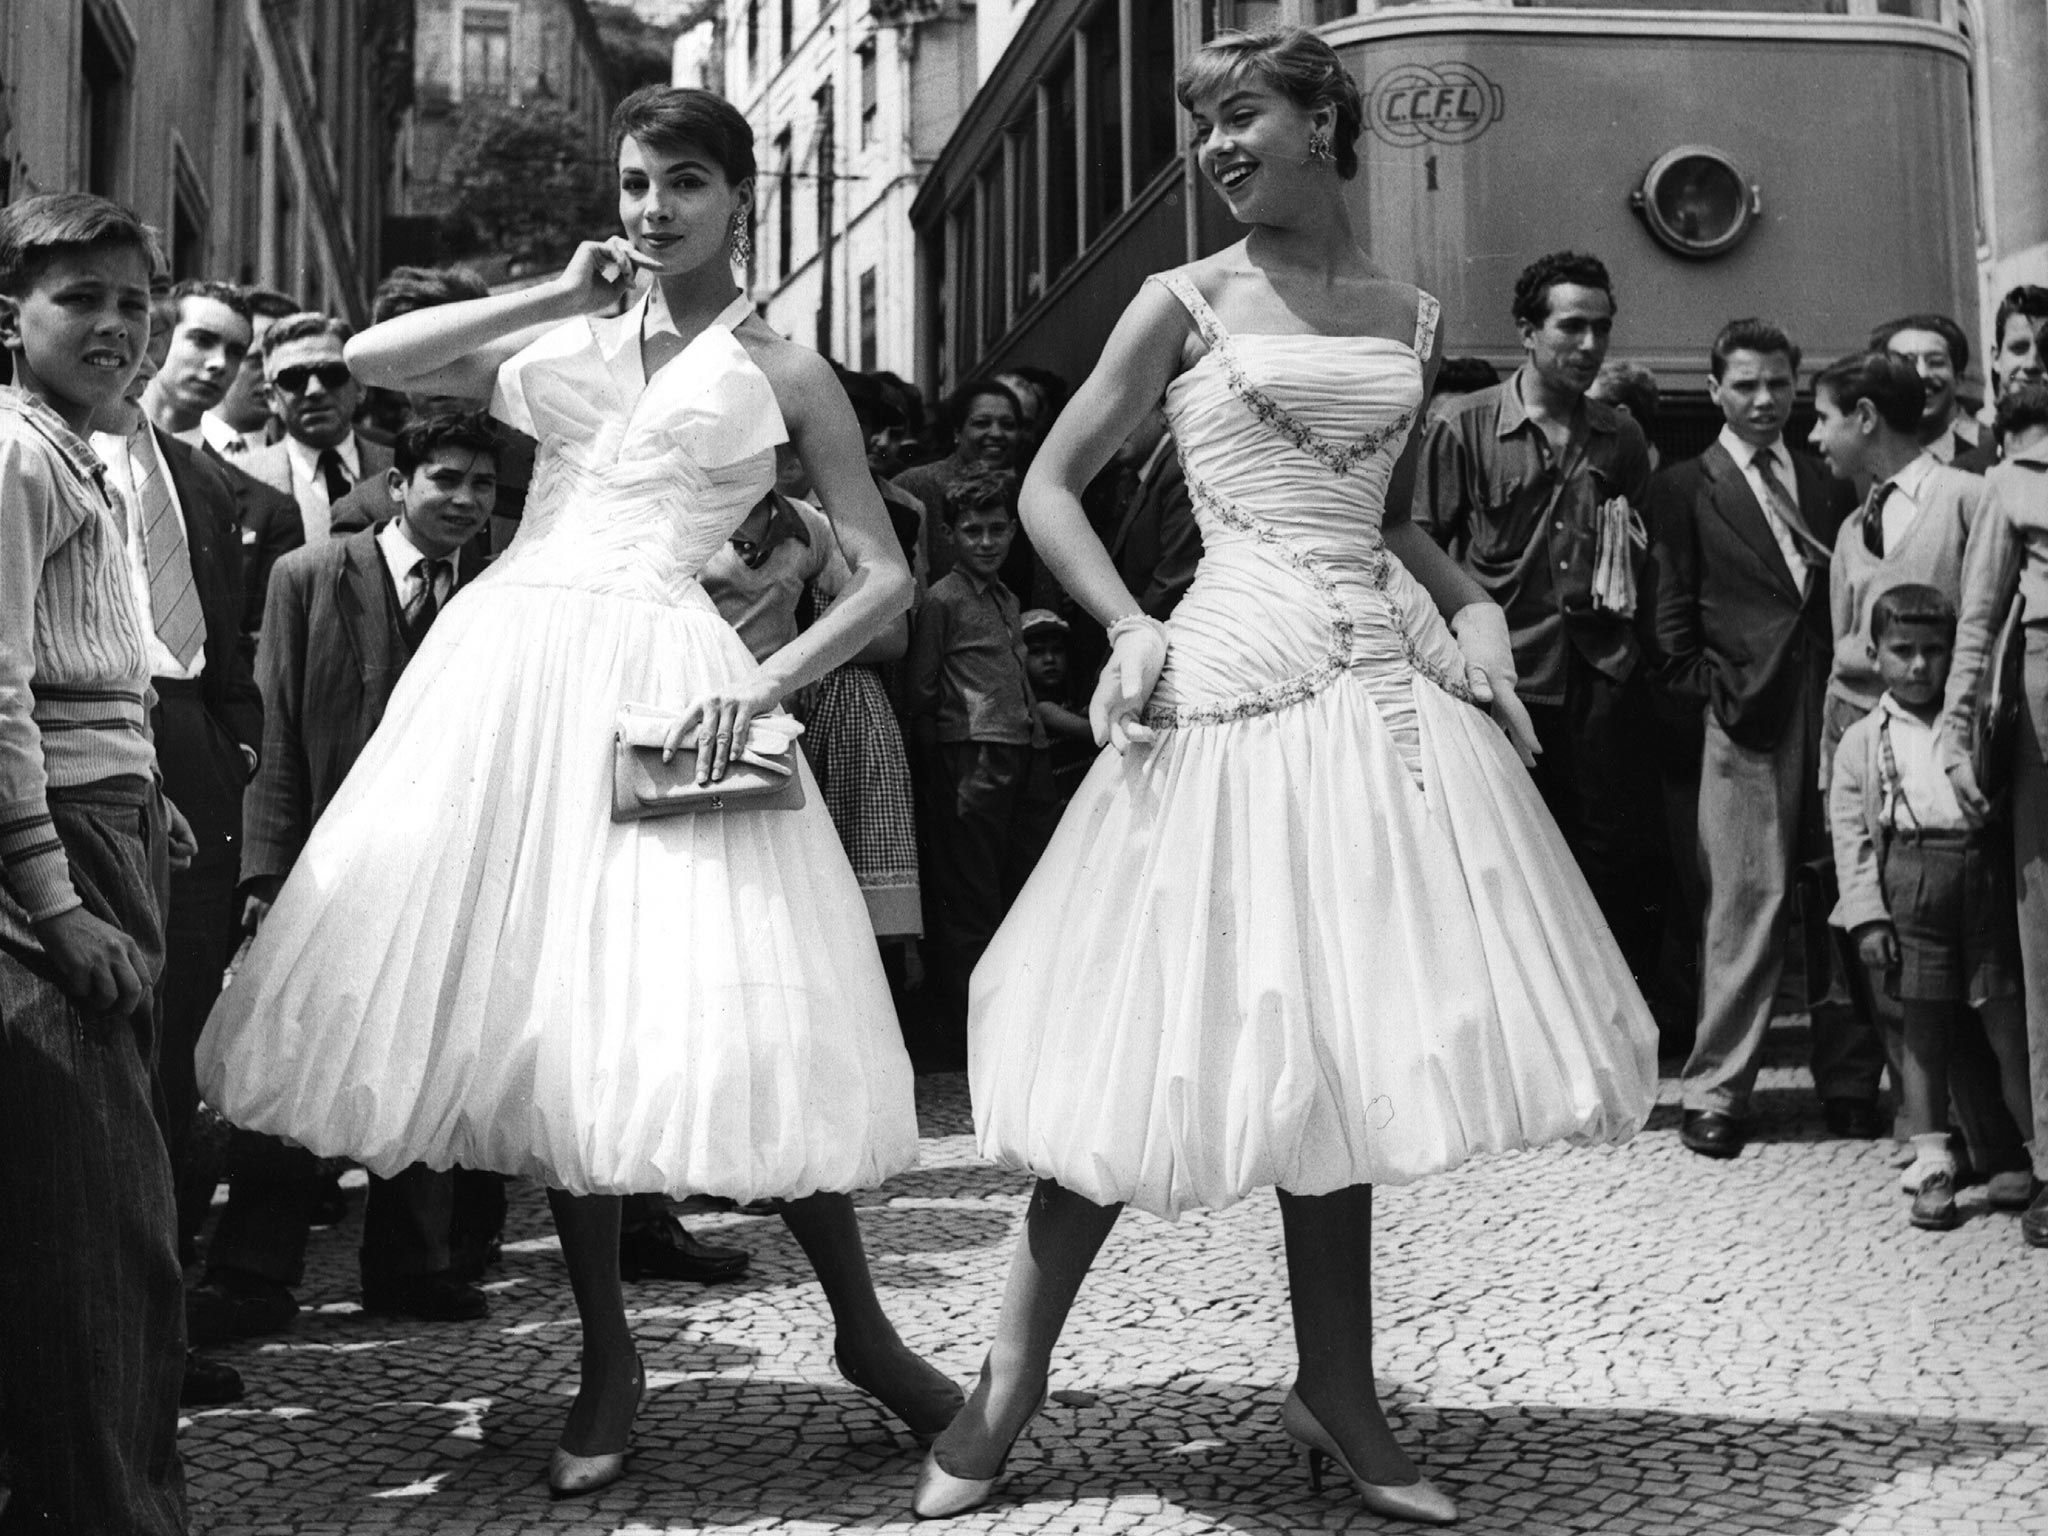 Dresses by Jole Veneziani (1956)